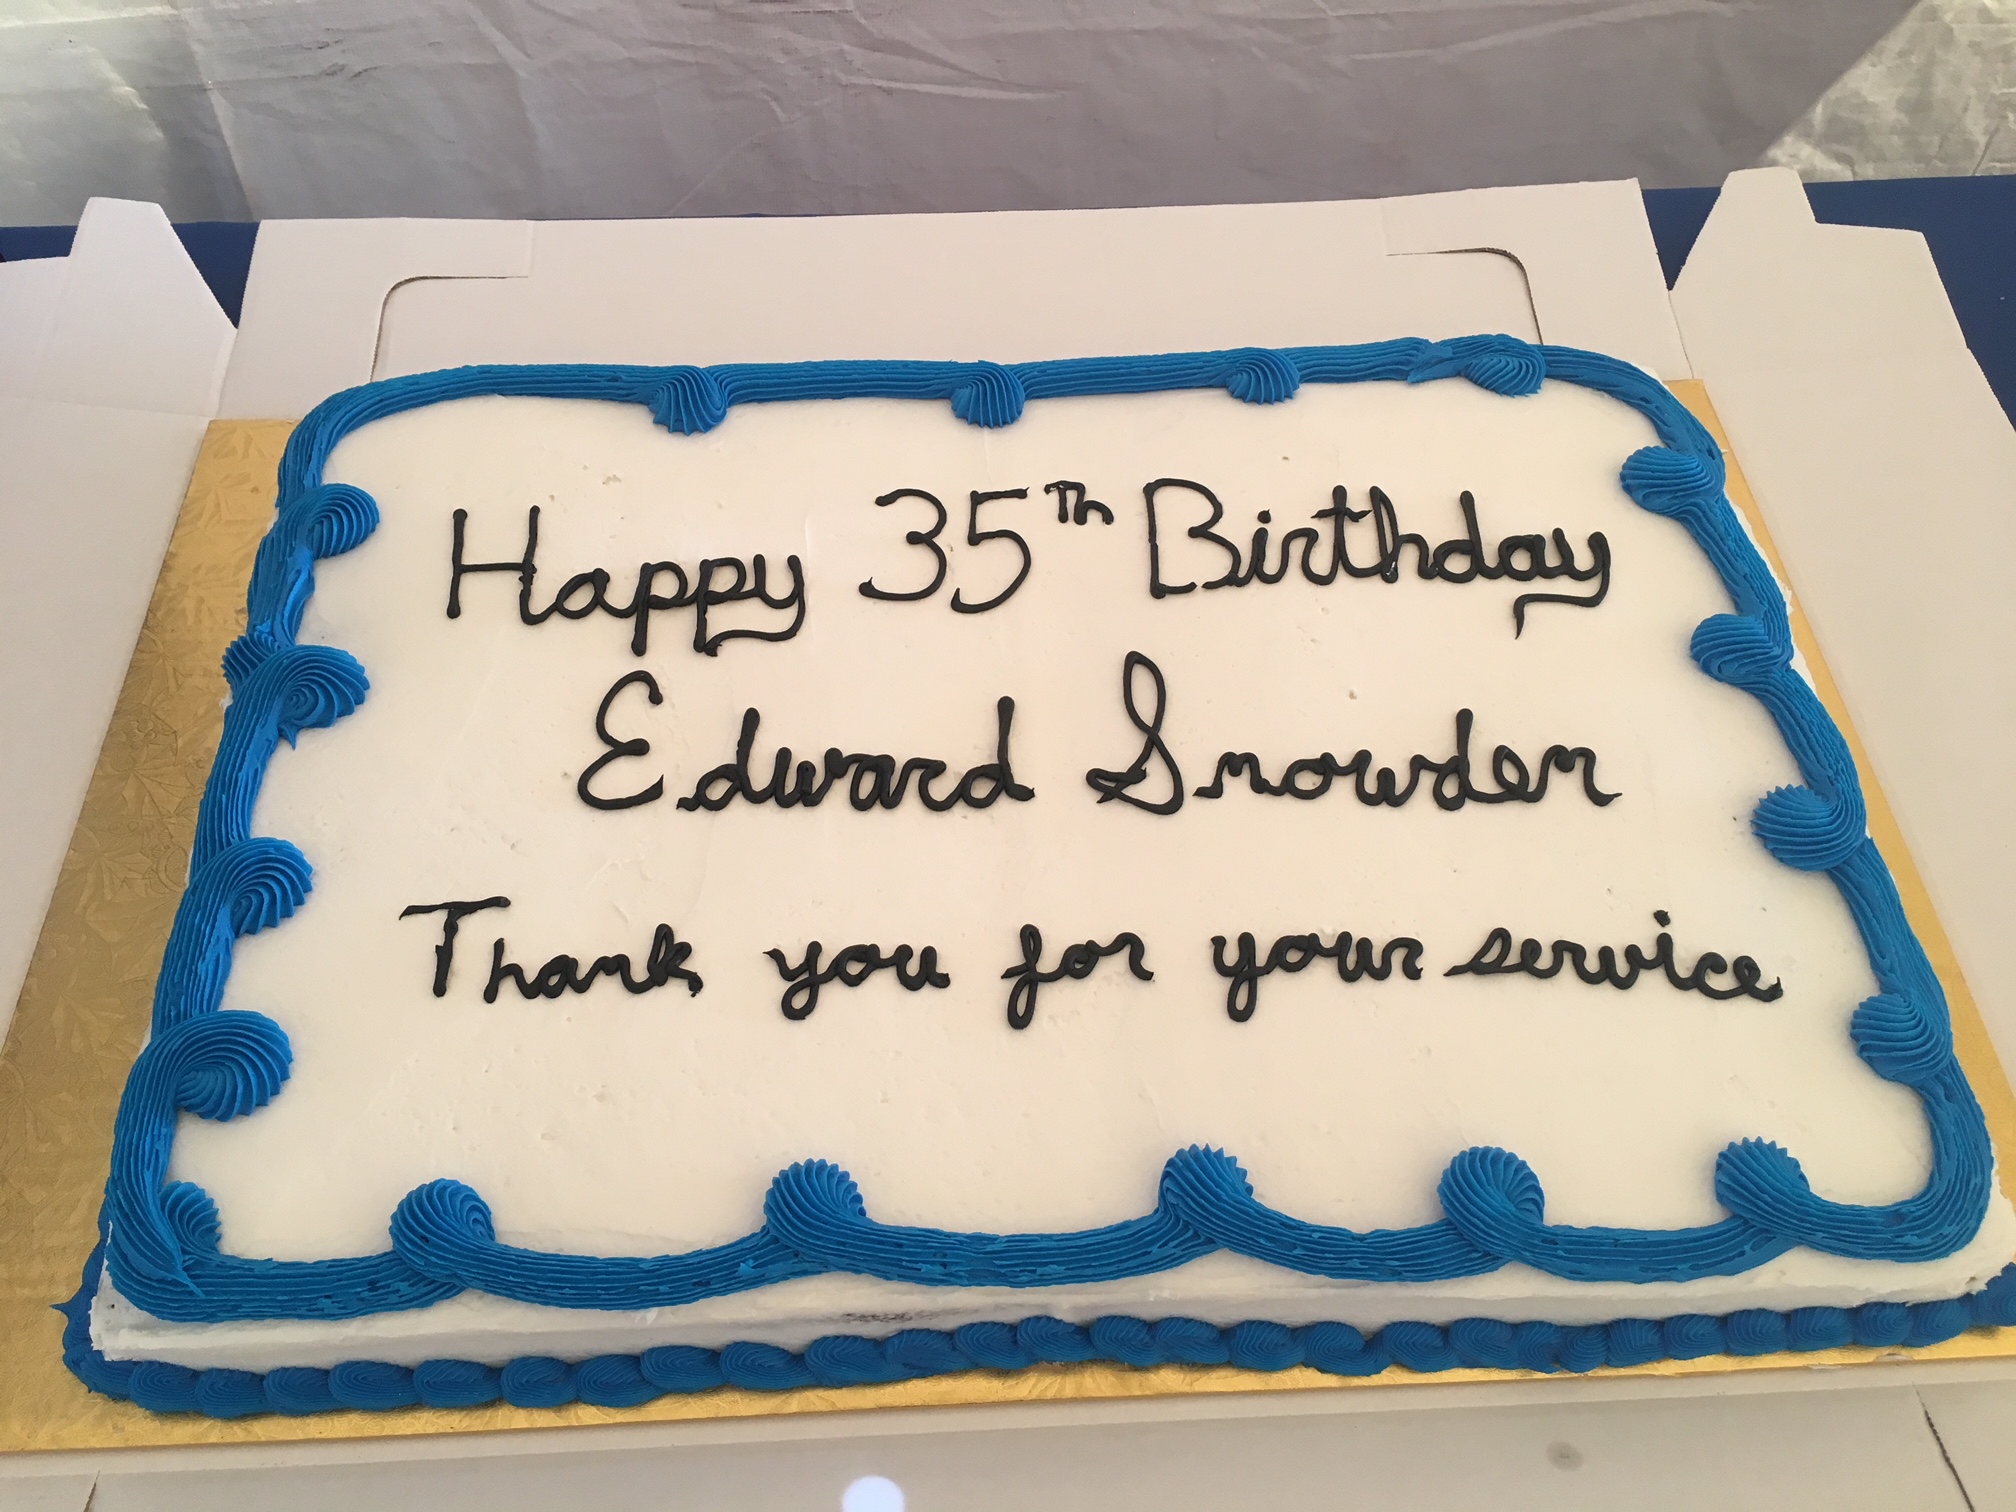 Happy 35th Birthday Edward Snowden!